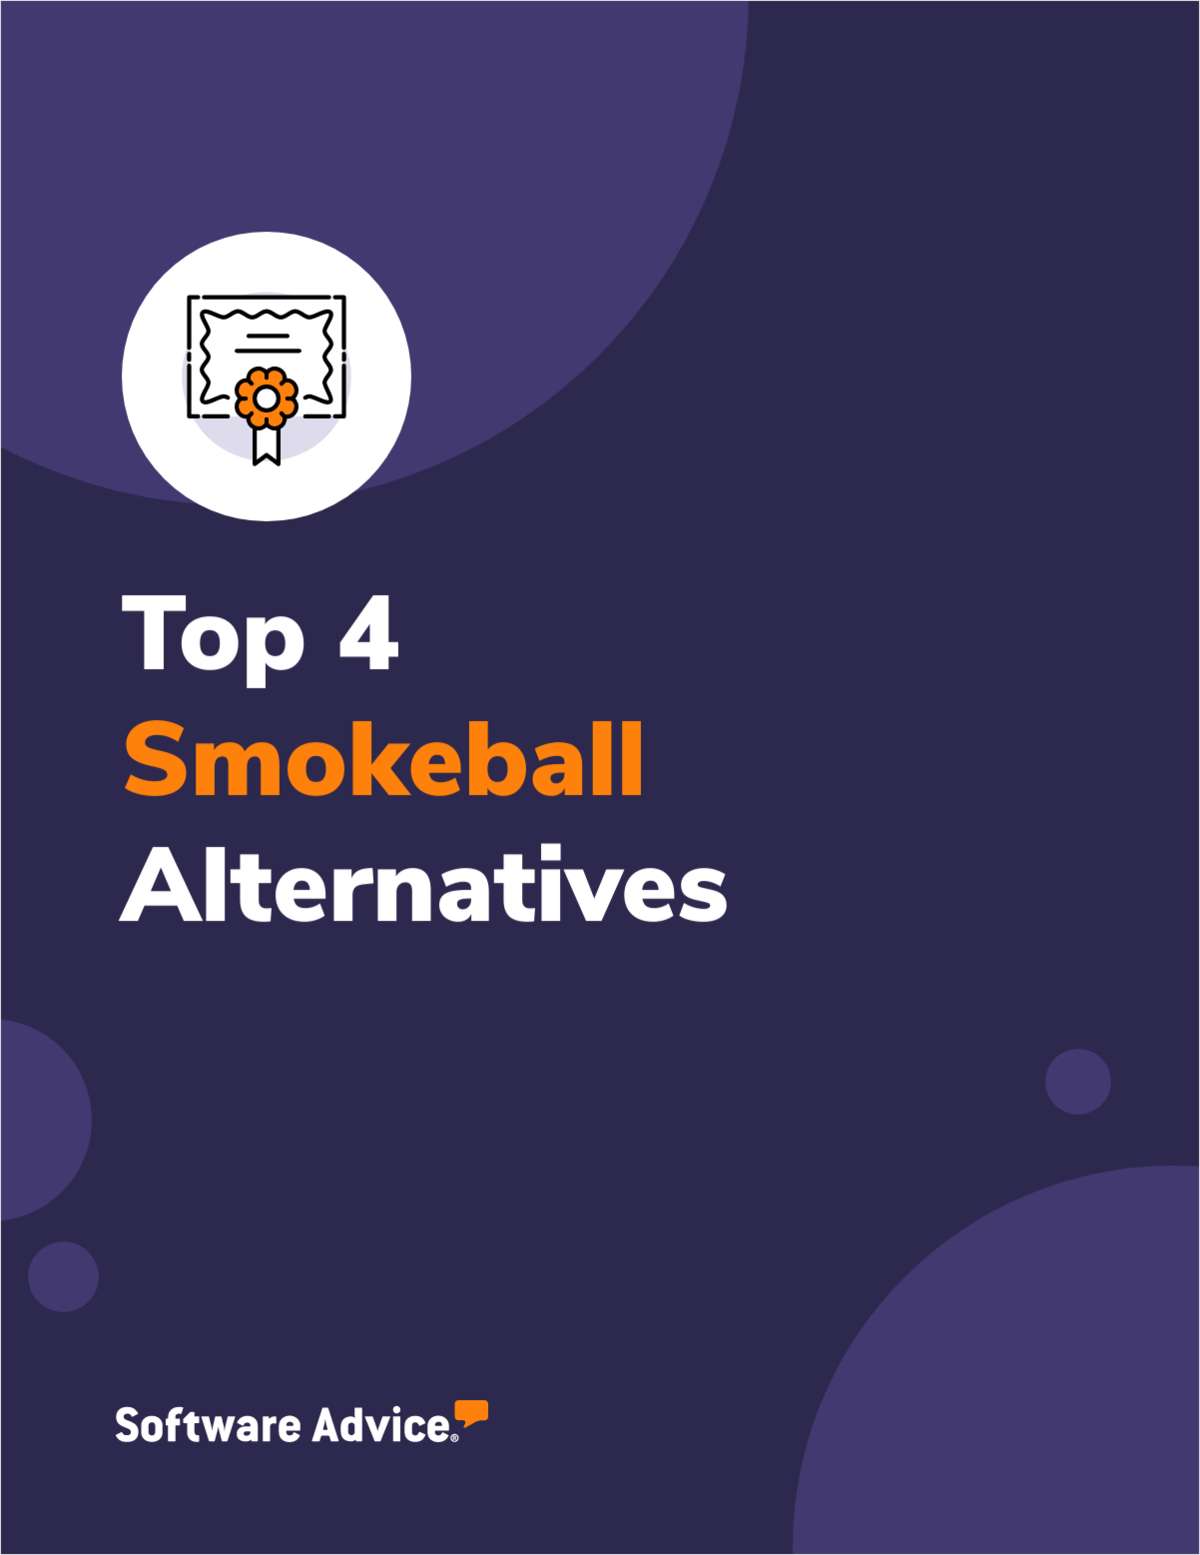 Top 4 Smokeball Alternatives